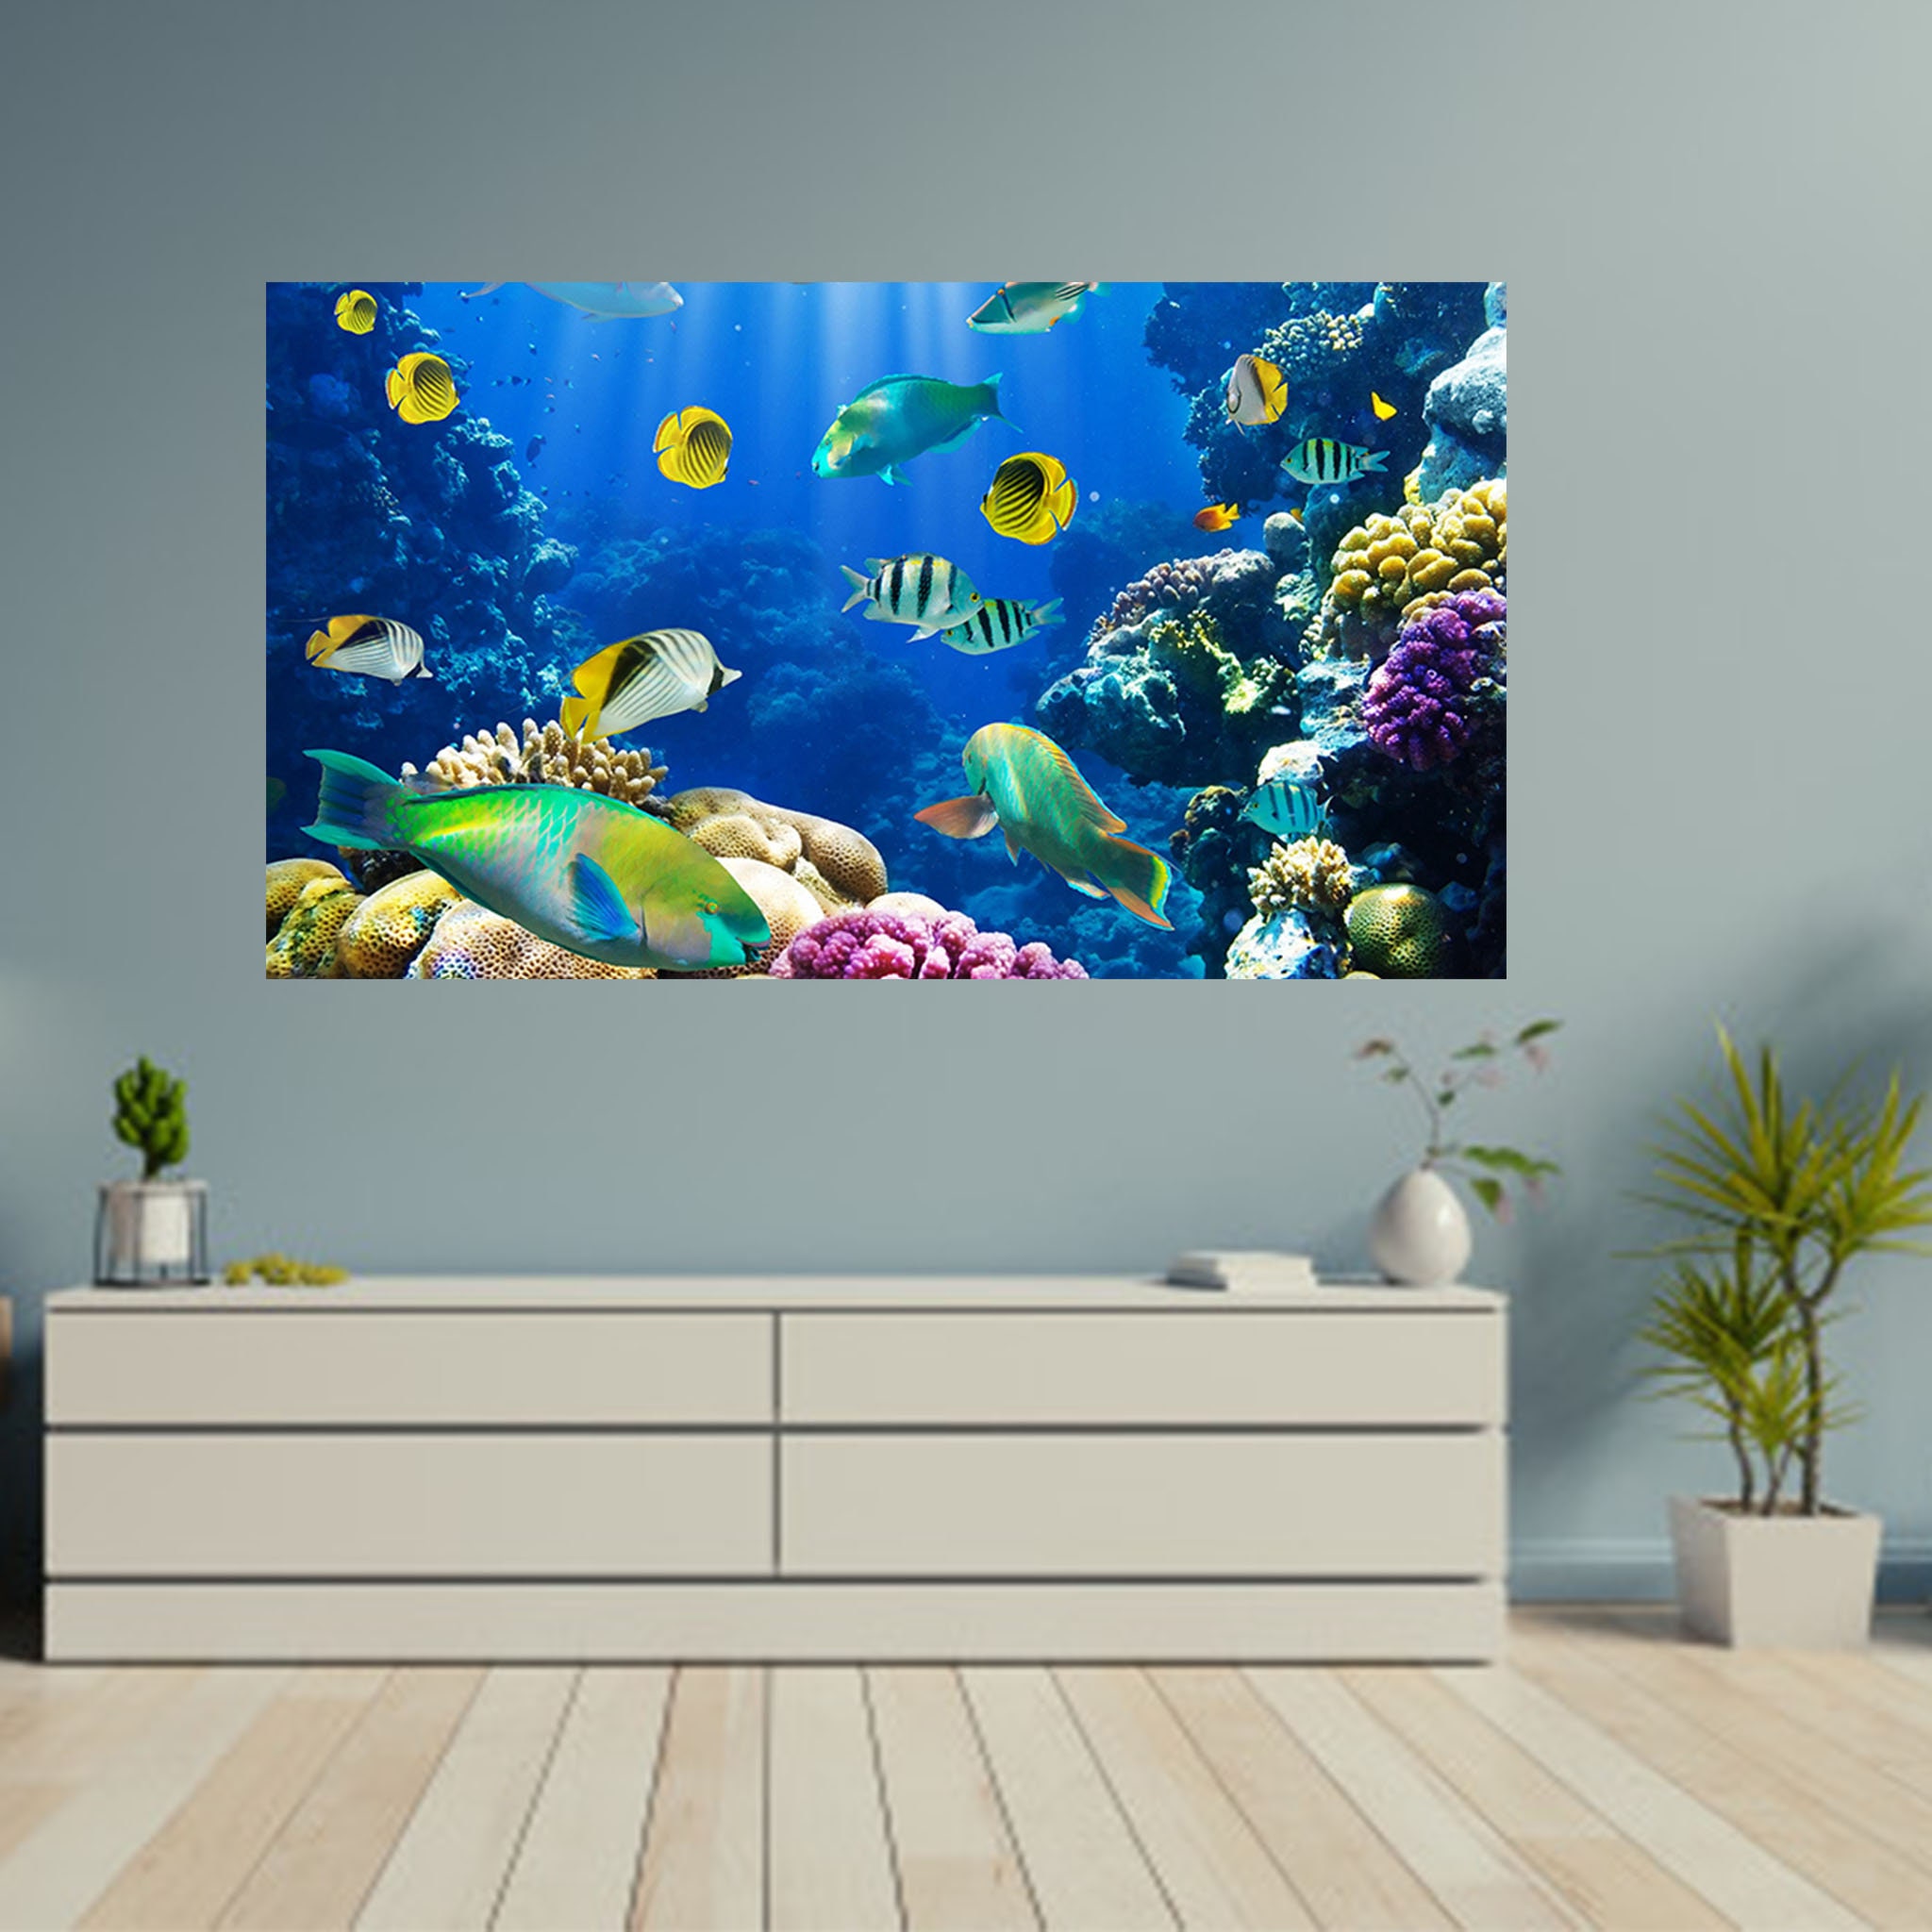 Wall Sticker Aquarium Sea Life Fish Theme Poster Self Adhesive | Etsy